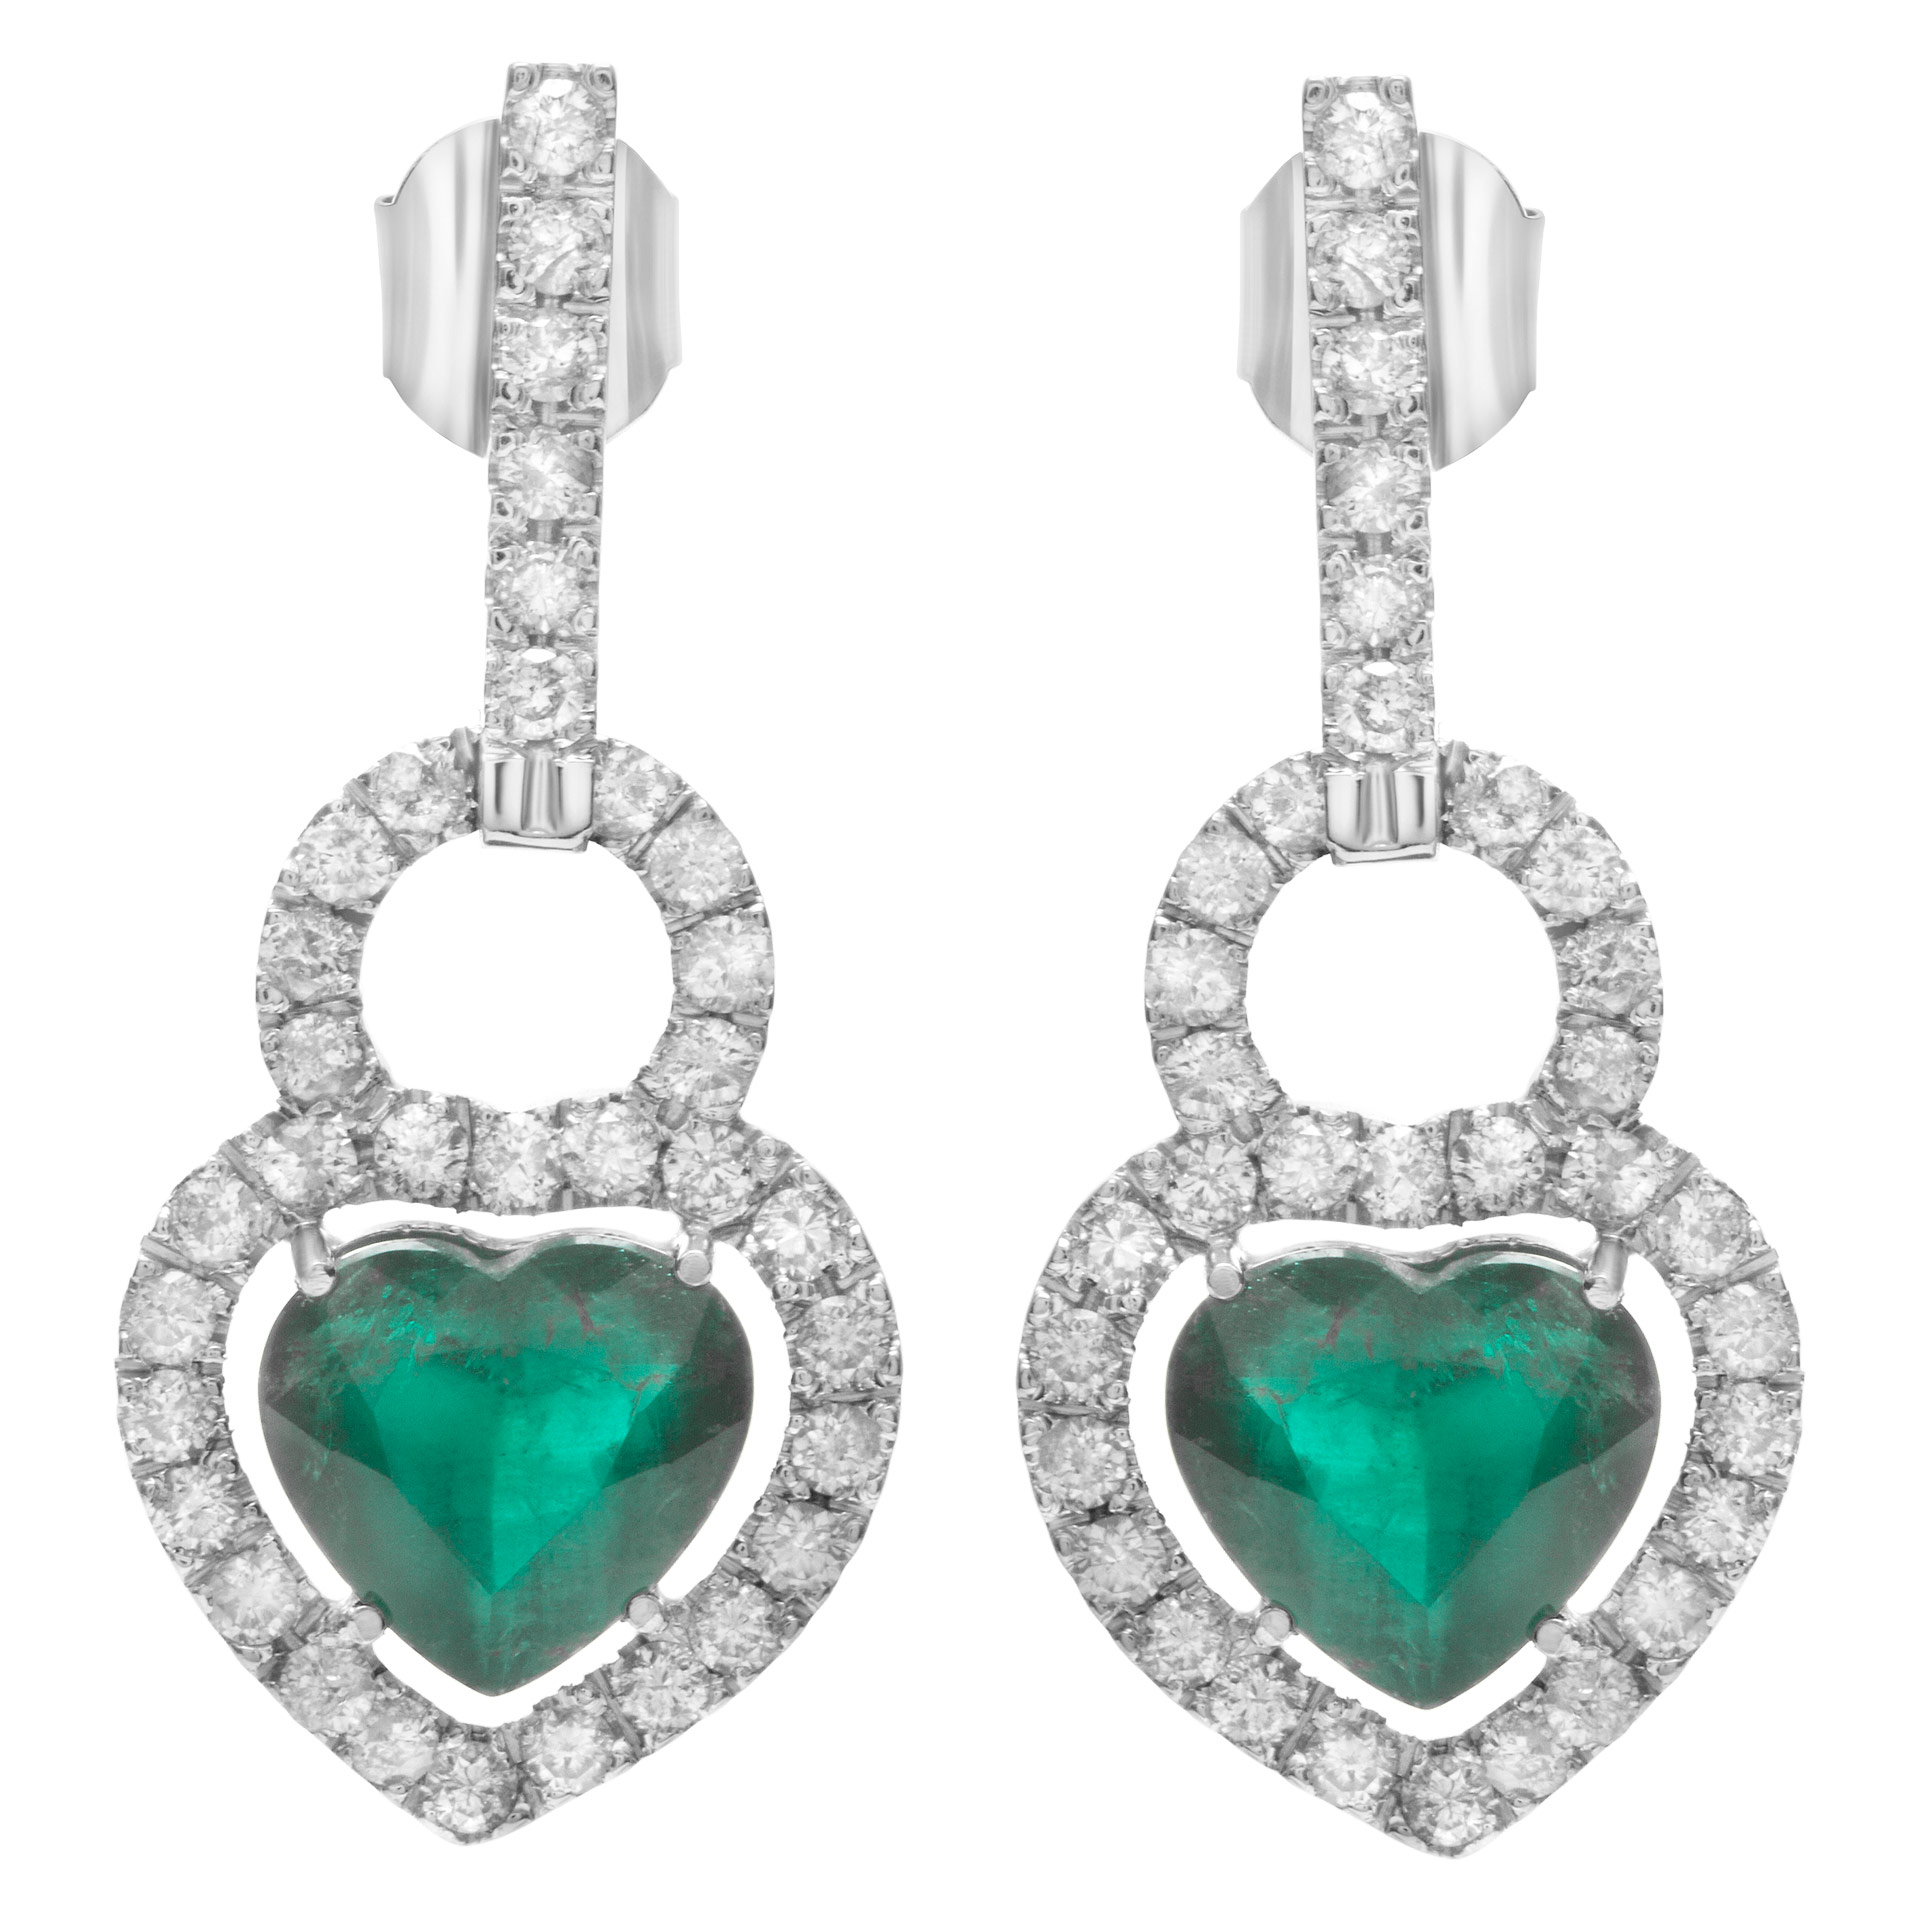 Heart shape emerald earrings with 2.80 cts in diamonds set in 18k white gold